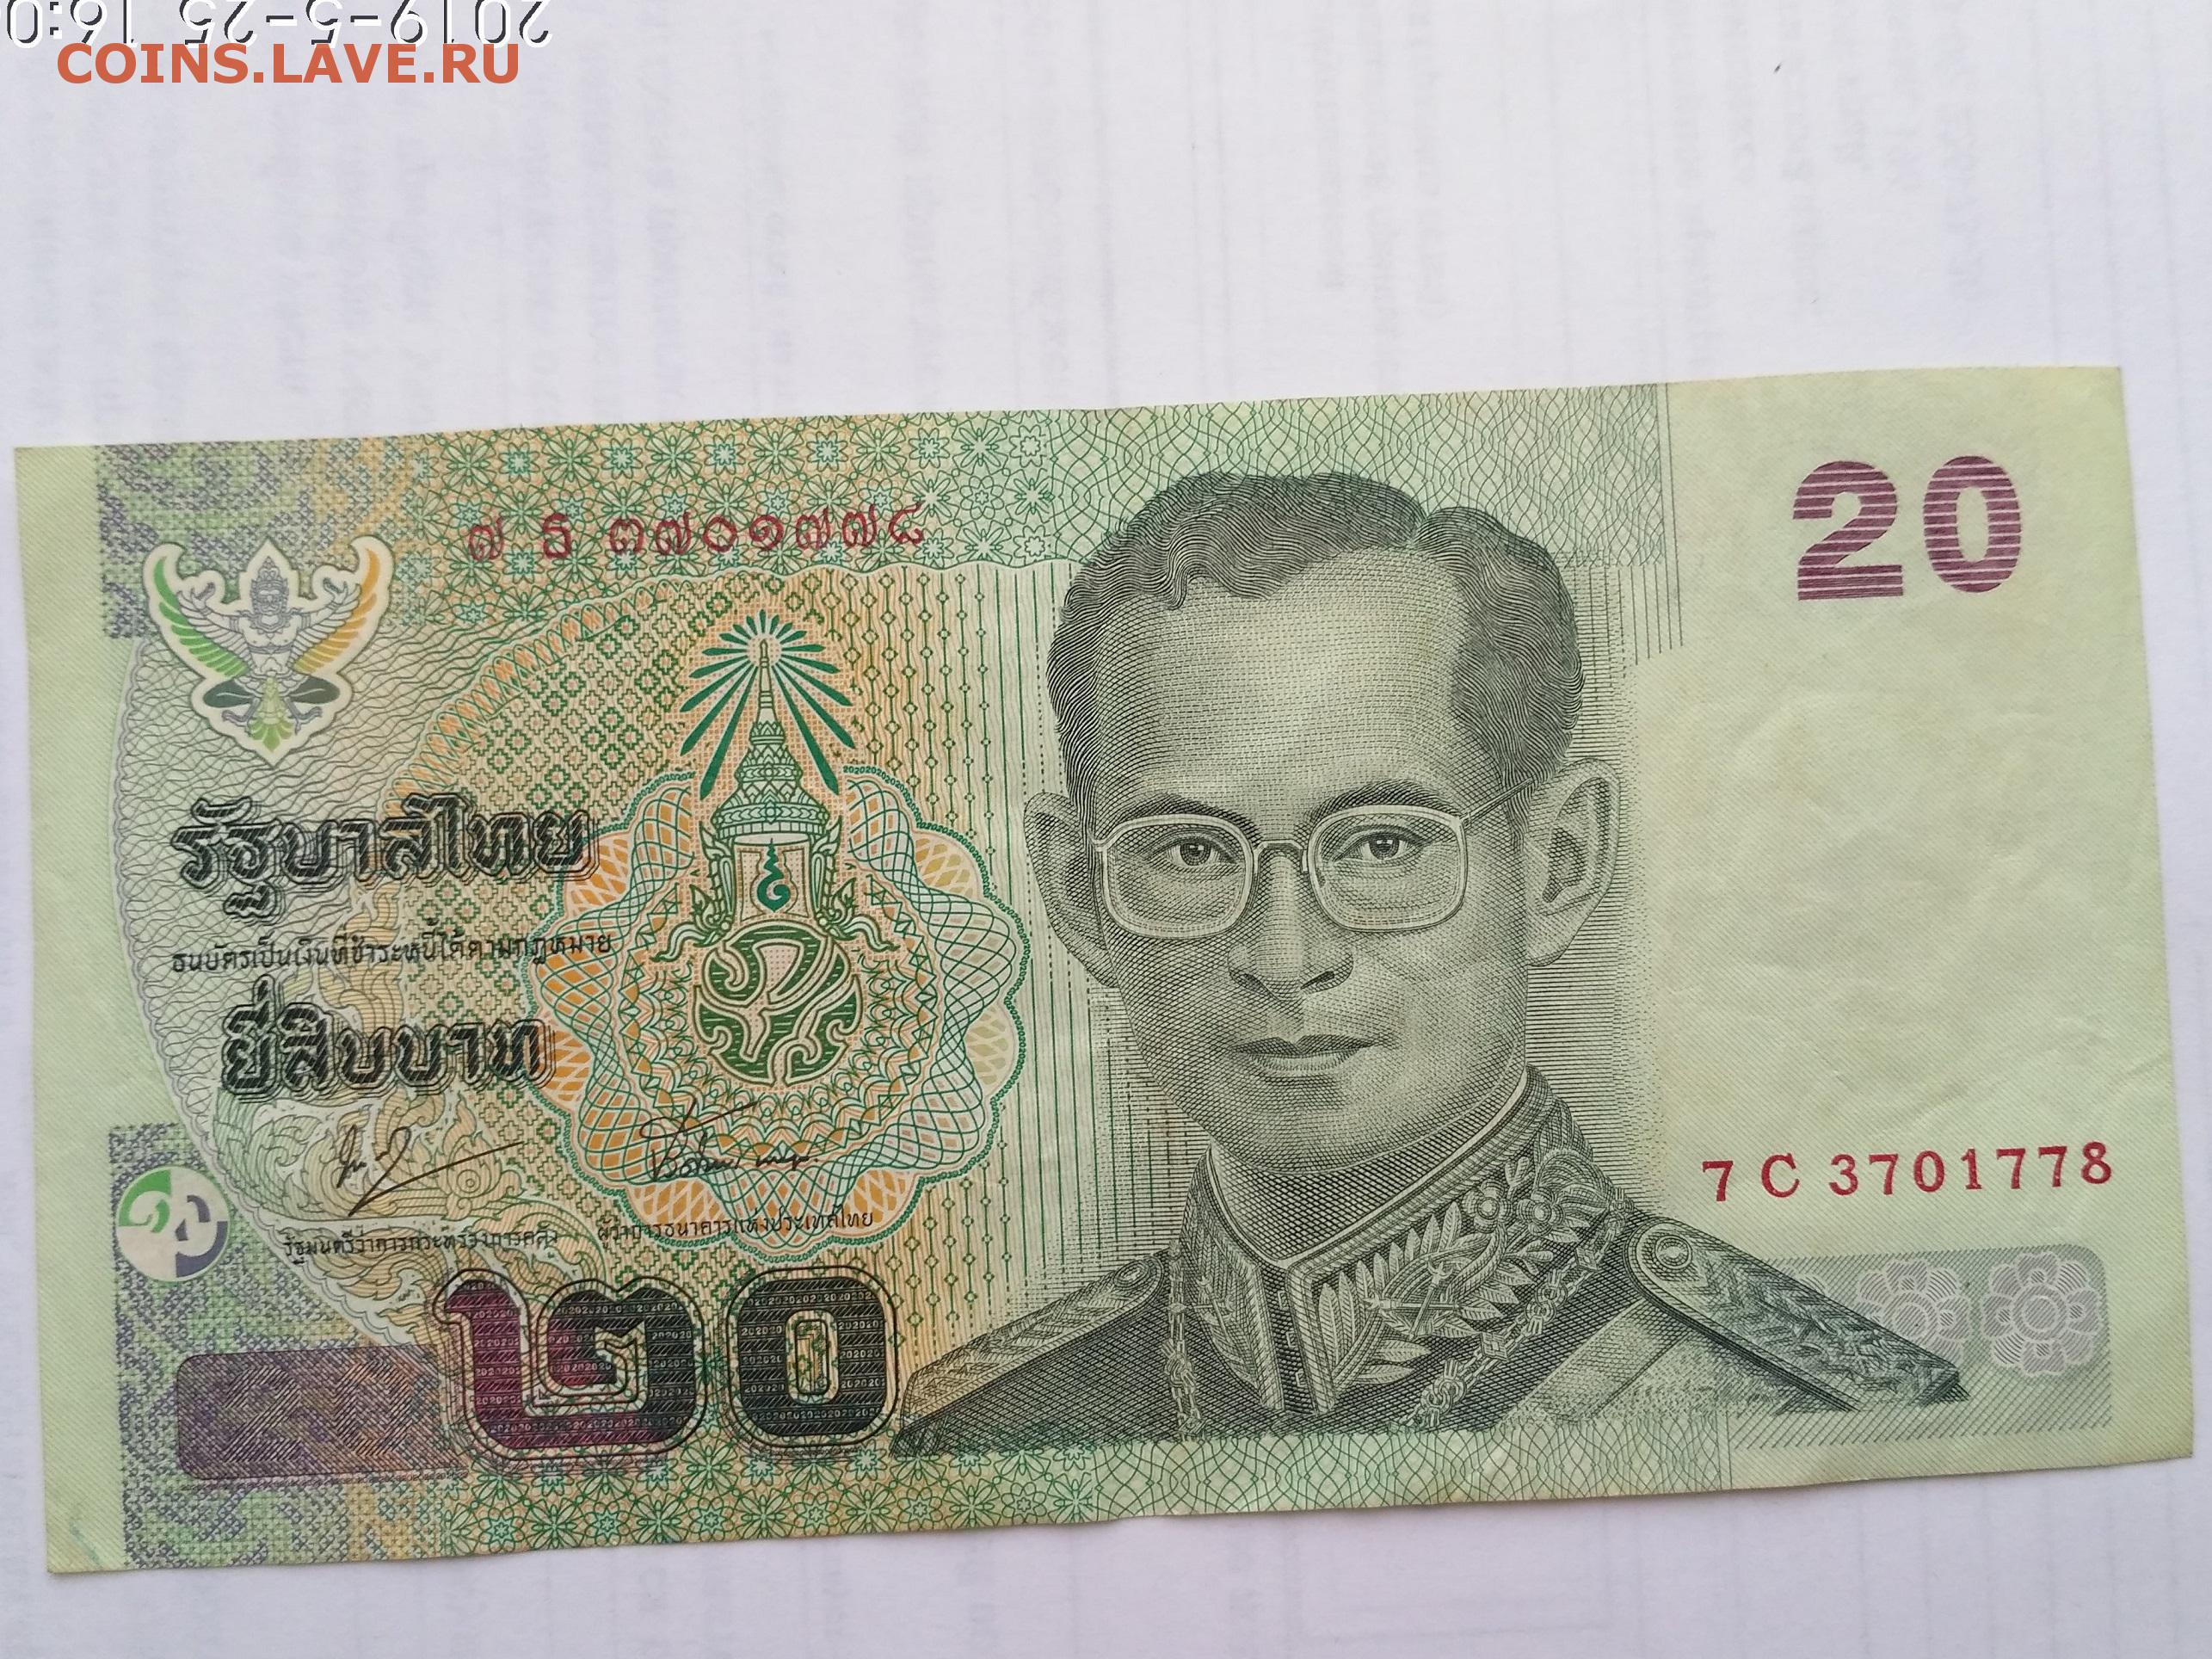 50000 батов в рублях. Банкноты Тайланда 20 бат. Банкнота Таиланда 20 бат 2003. Купюра 100 бат Таиланд. Банкнота Тайланда 20 бат 2022 года.